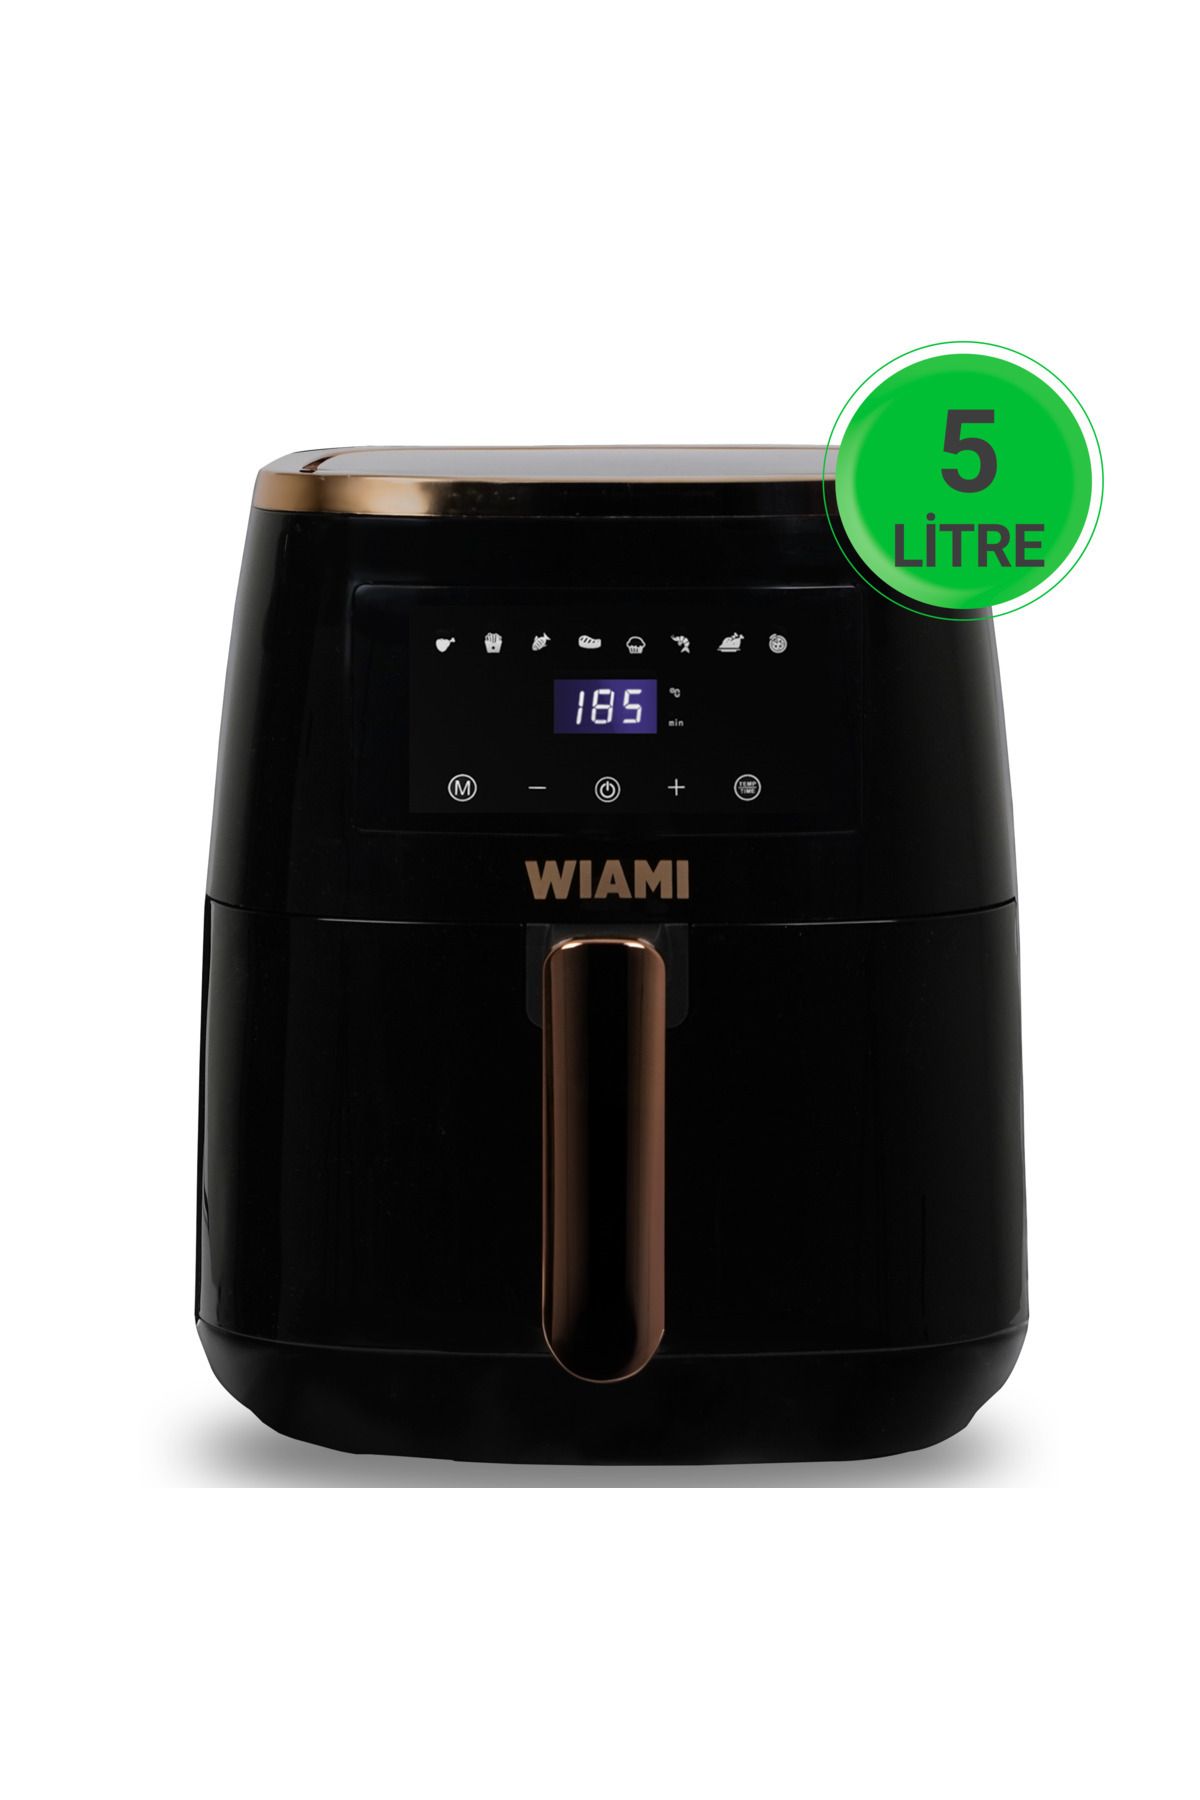 Wiami Wiami Air Fryer 5 Litre Siyah Akıllı Fritöz